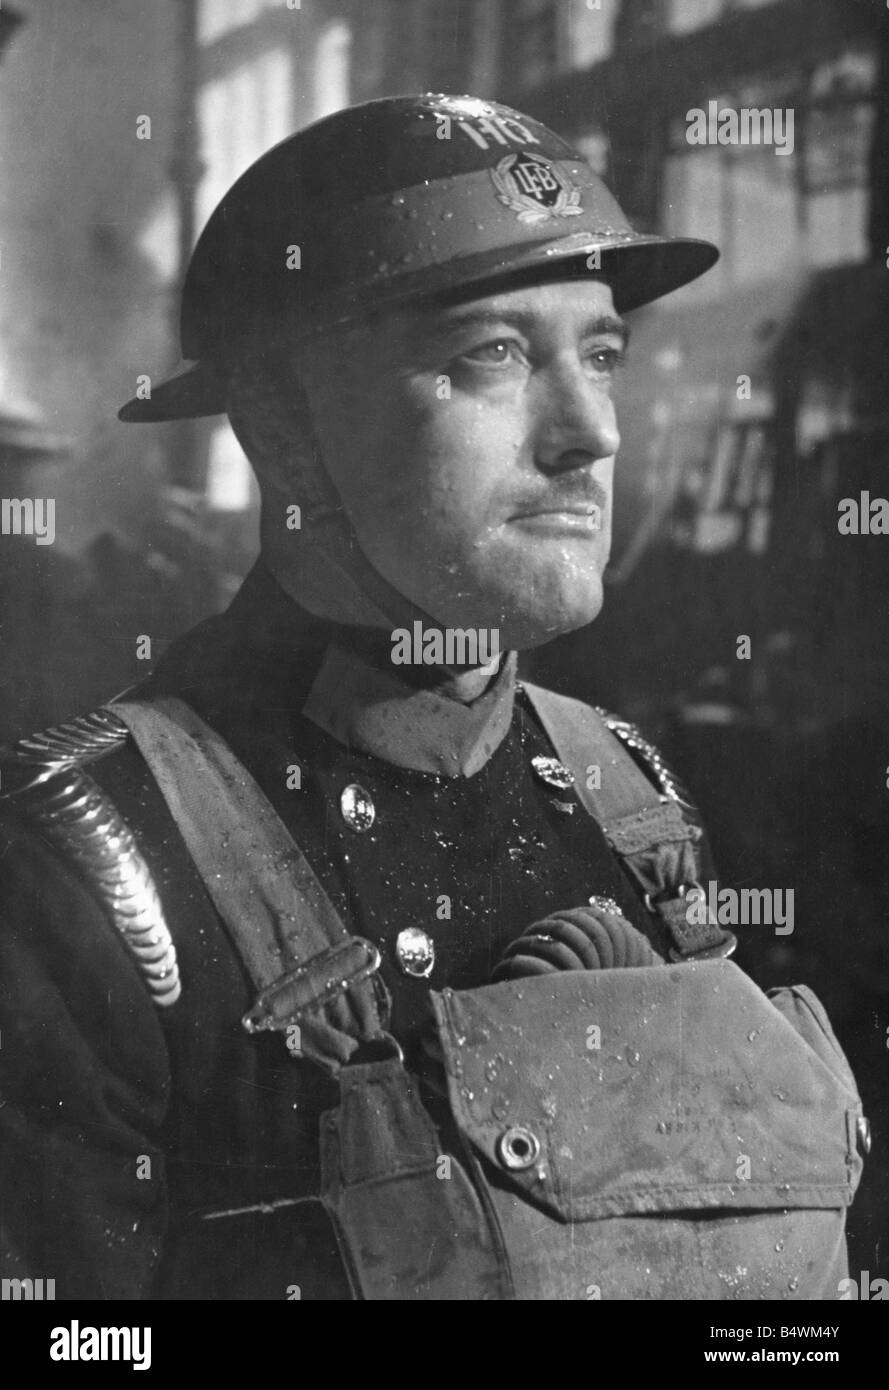 A member of the London Fire Brigade seen here during the blitz World War II Uniform Tin Helmet Breathing Apparatus Home Front Air Raids Fireman Firefighter Circa 1941 Mirrorpix Stock Photo